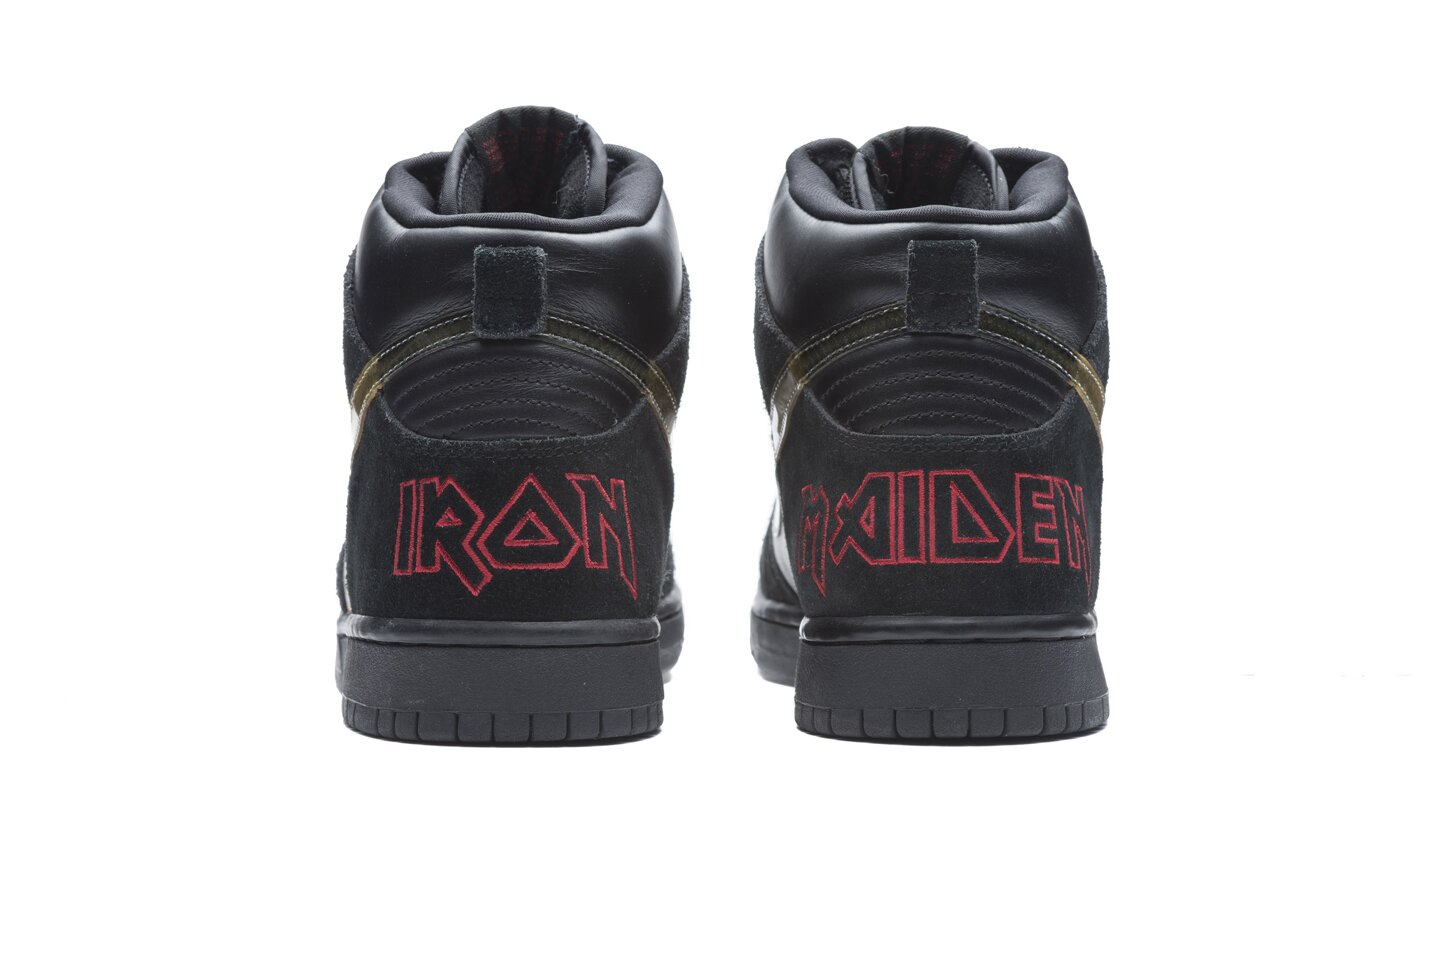 Iron Maiden - Nike Skateboarding